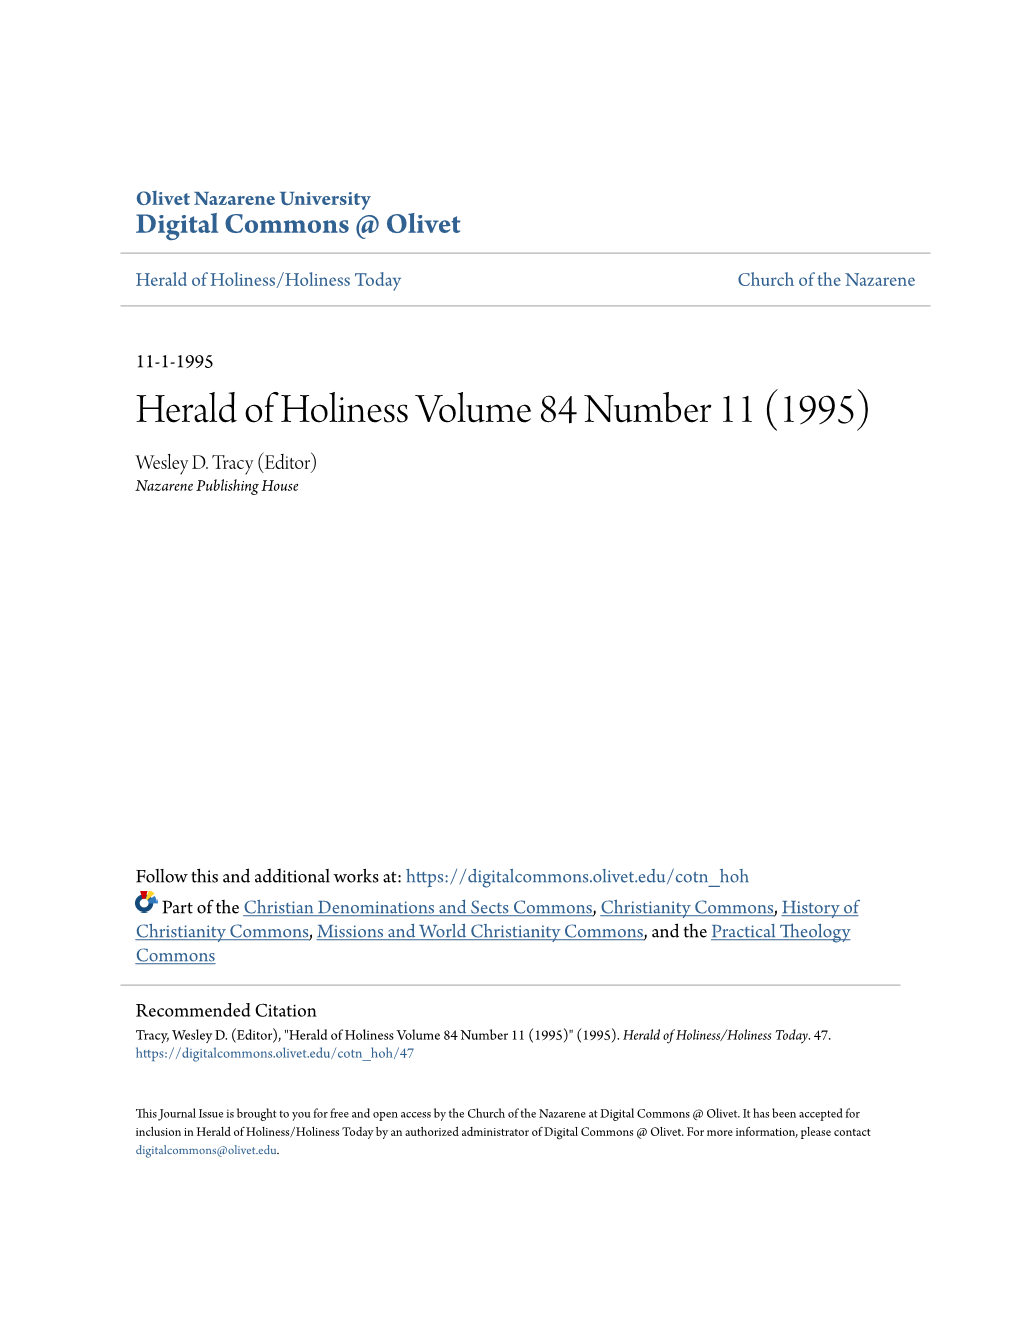 Herald of Holiness Volume 84 Number 11 (1995) Wesley D